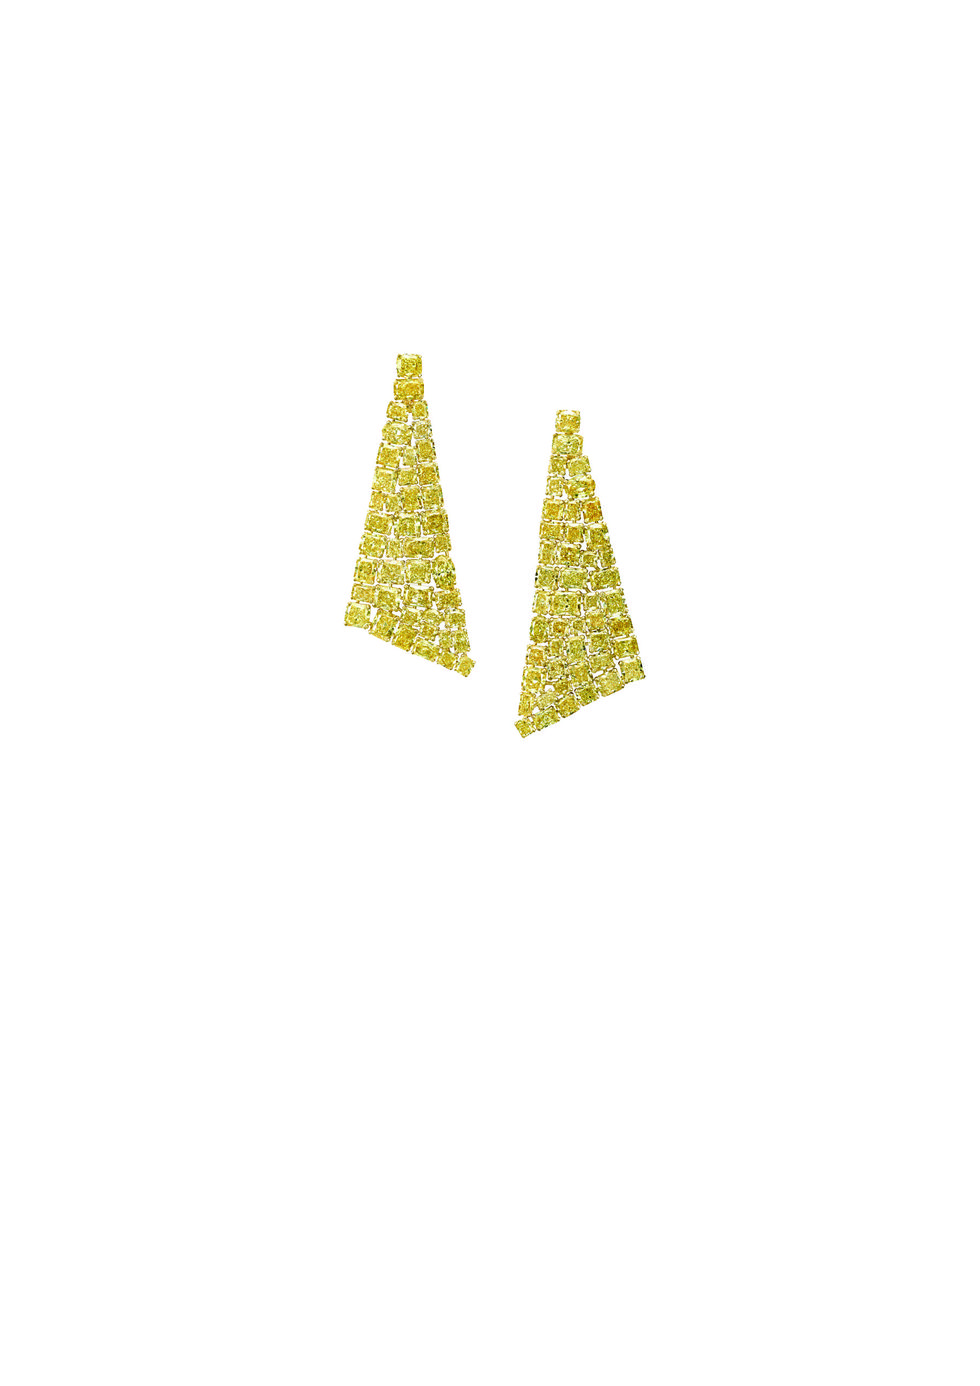 Earrings, Yellow, Triangle, Triangle, Cone, Fashion accessory, Jewellery, Metal, 